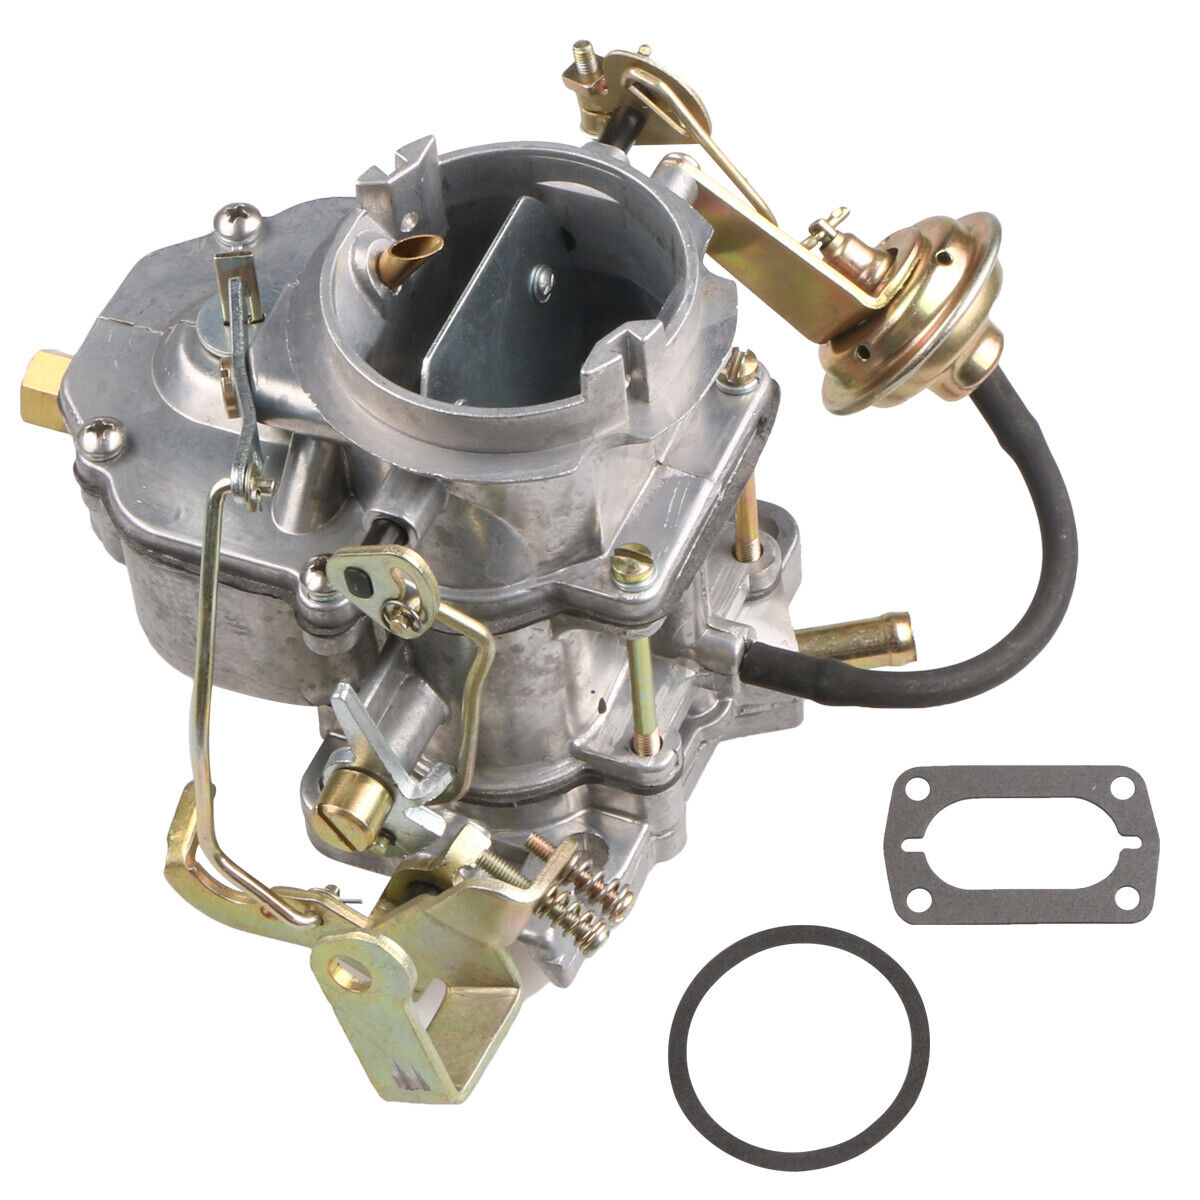 New Carburetor For Dodge Chrysler 318 6CIL Engine Plymouth Gran Fury w/ Gasket